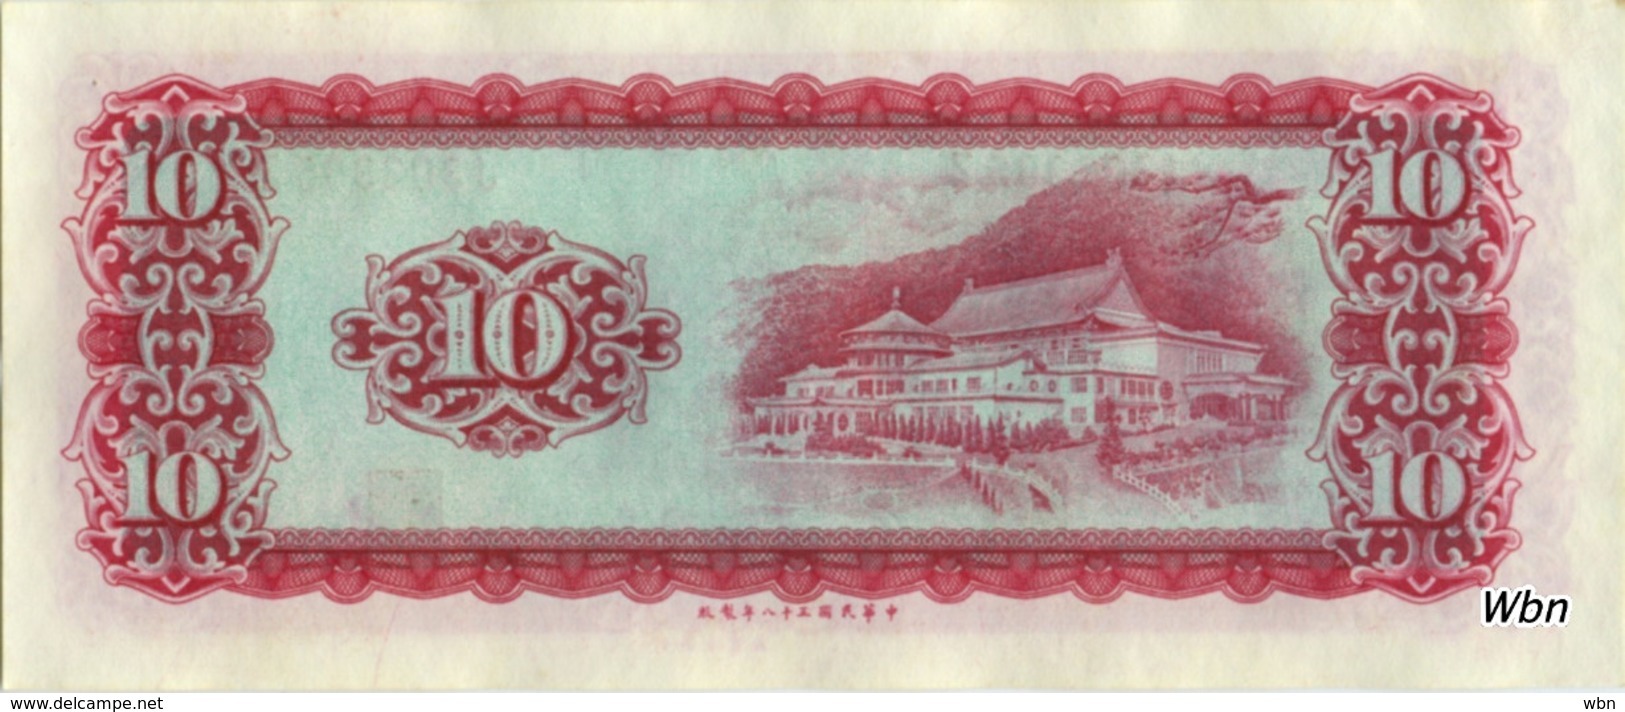 Taiwan 10 NT$ (P1979b) Letter A -UNC- - Taiwan